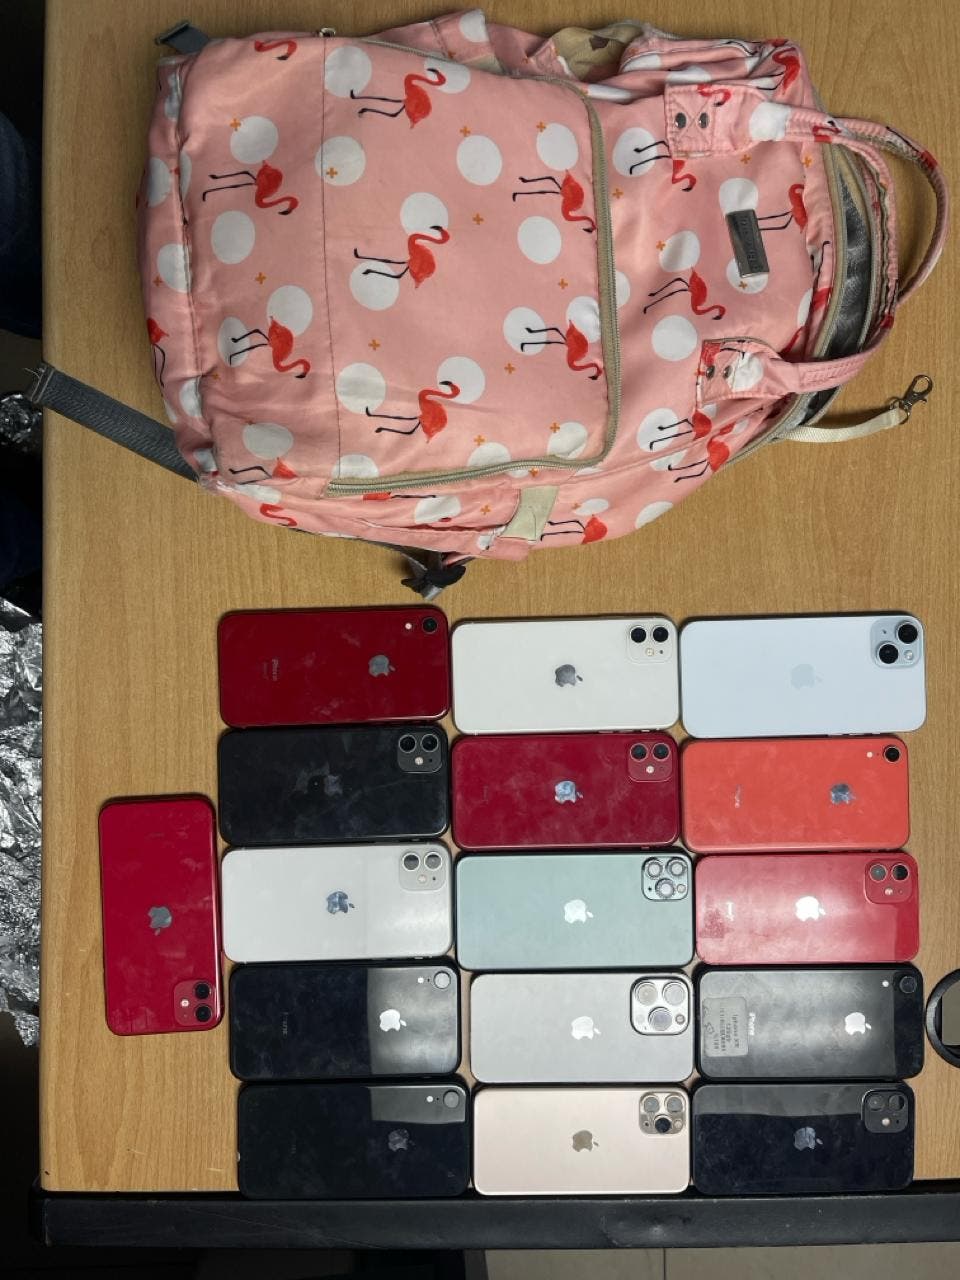 Apresan dos hombres por intentar vender 16 celulares alegadamente robados — El Nacional